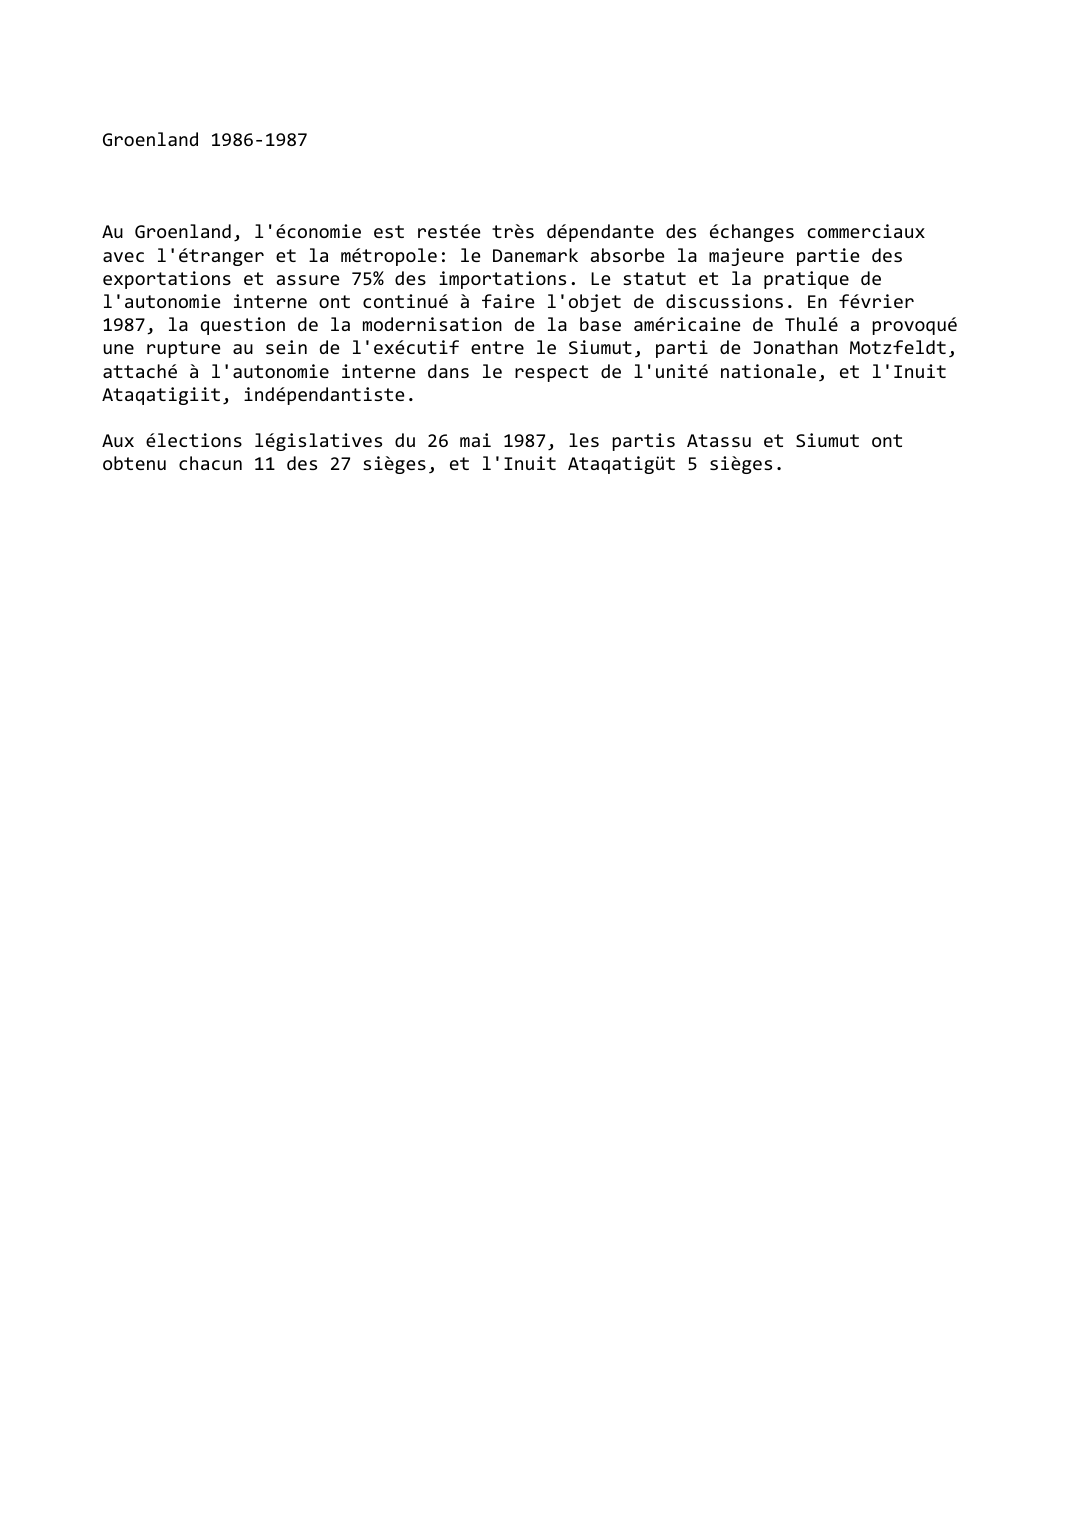 Prévisualisation du document Groenland (1986-1987)